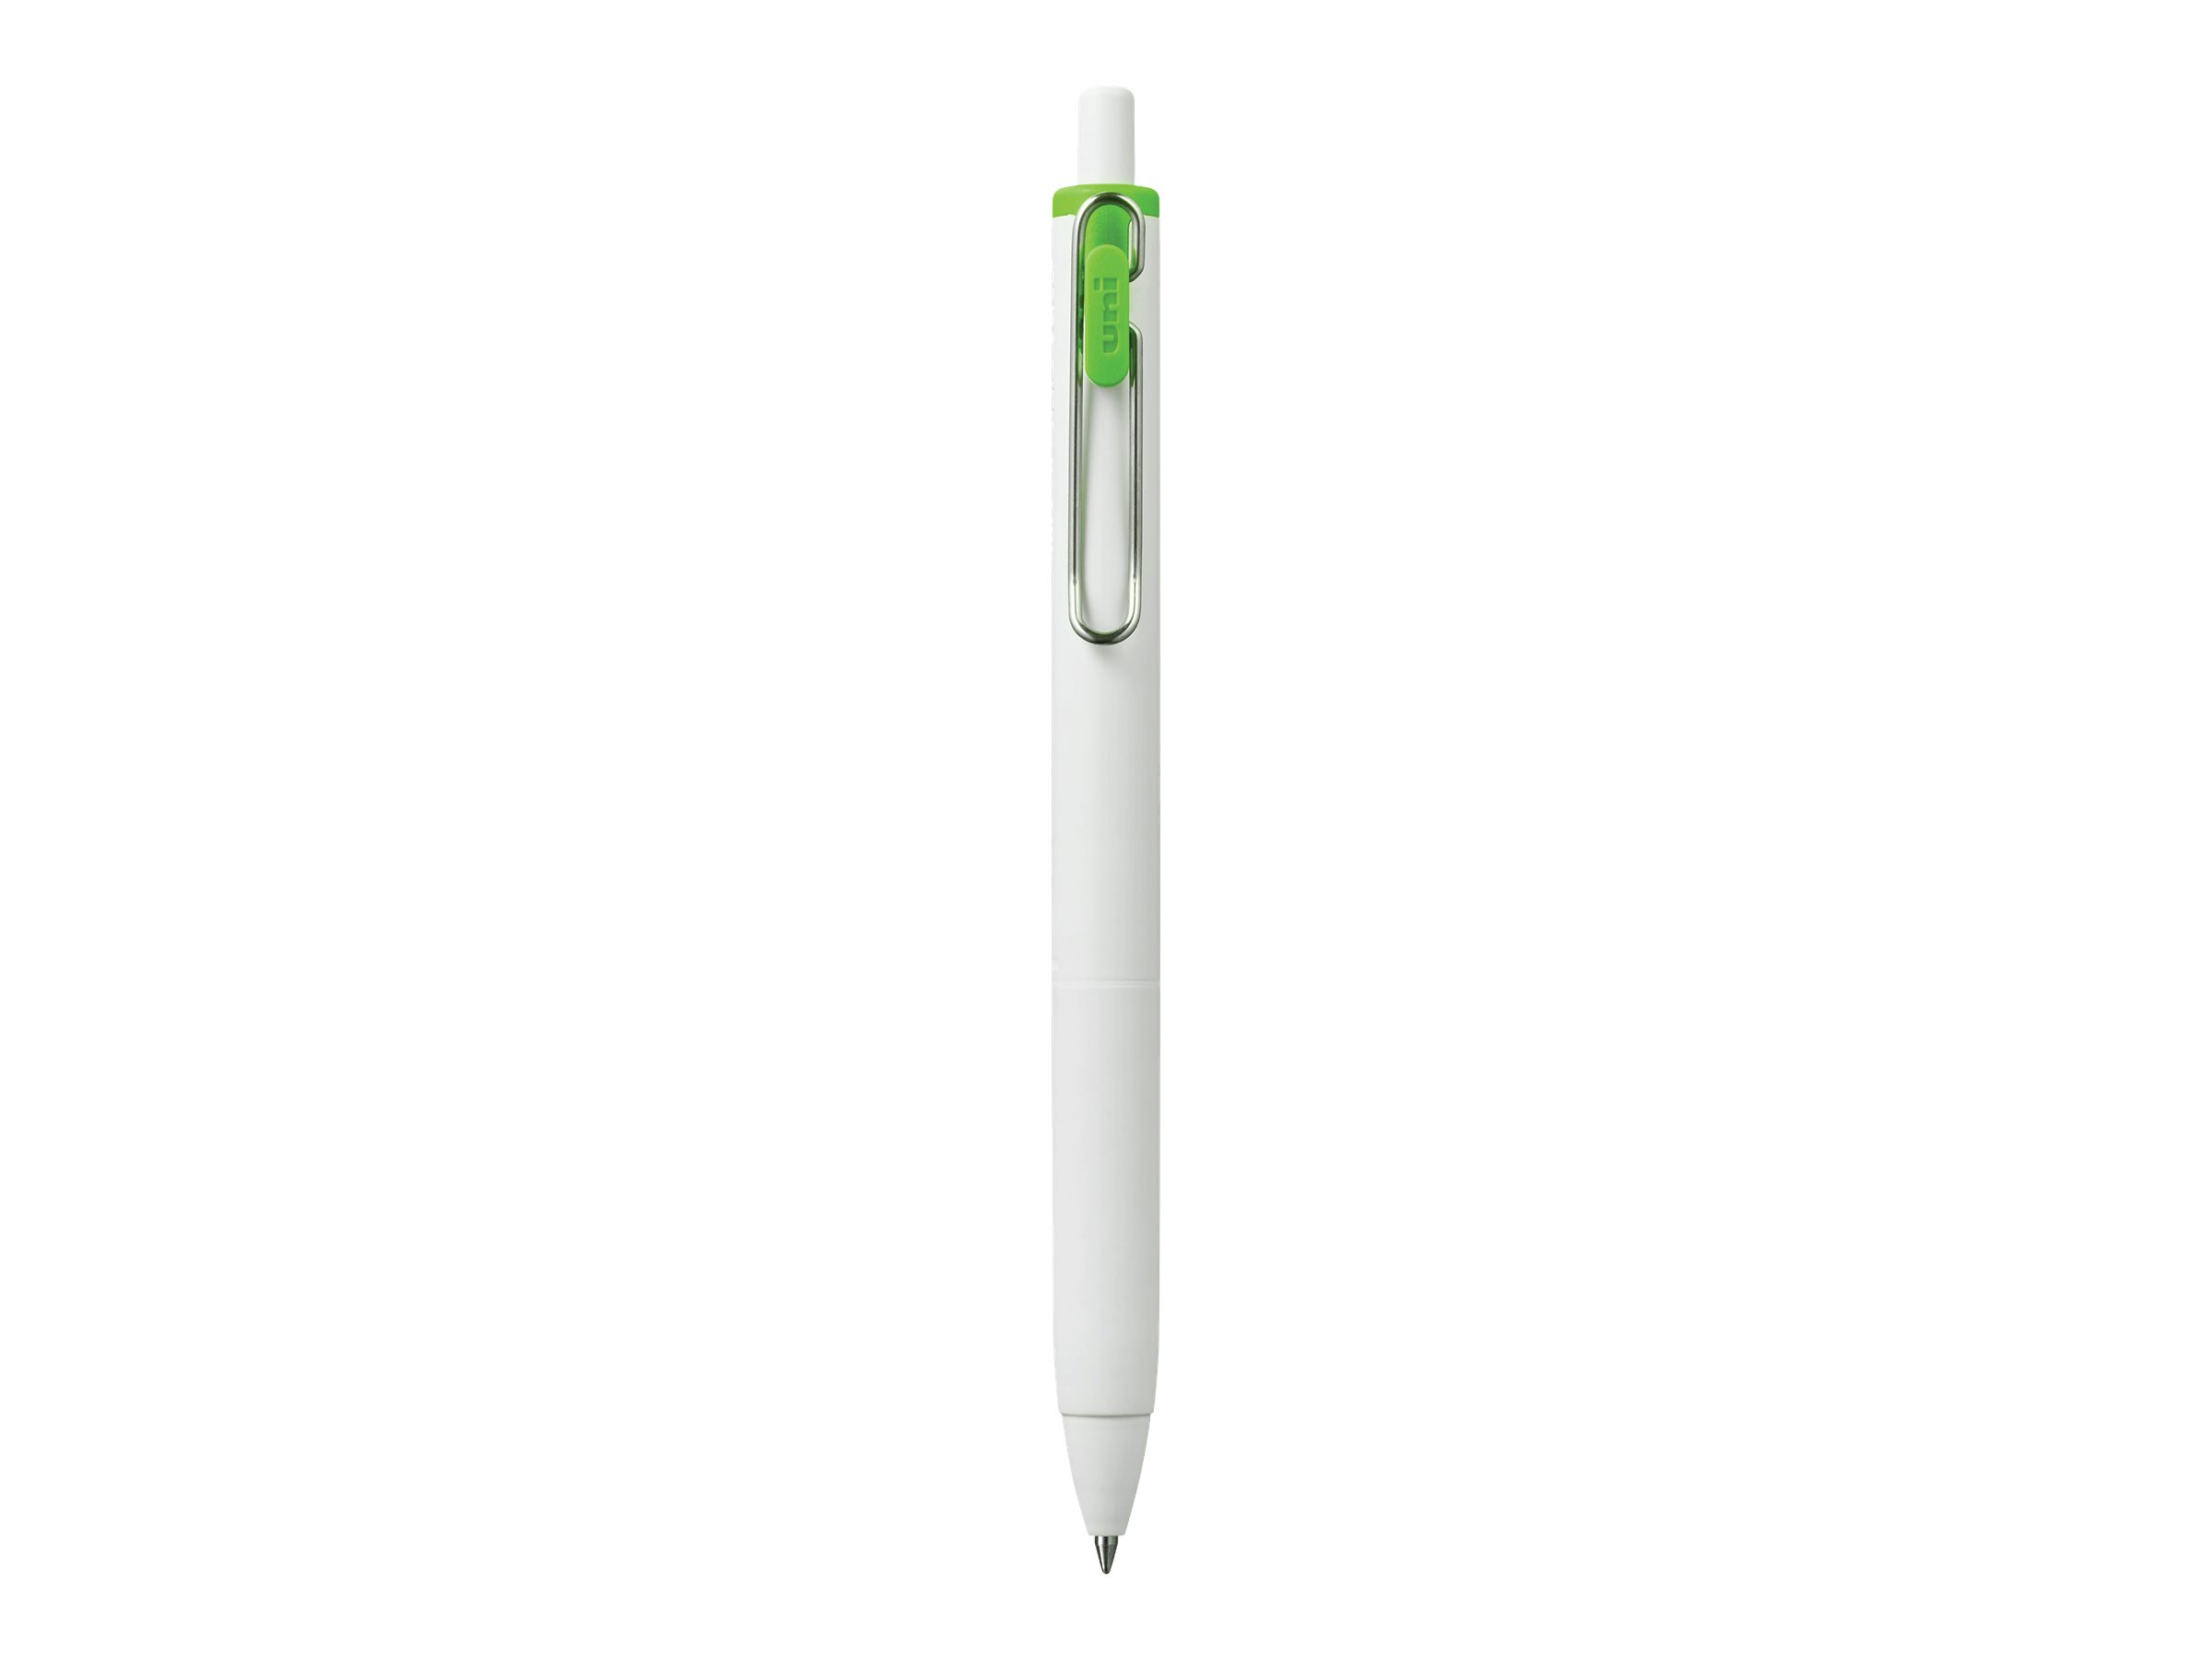 Uniball One Gel Pen 5 Pack, 0.7mm Medium Assorted Pens, Gel Ink